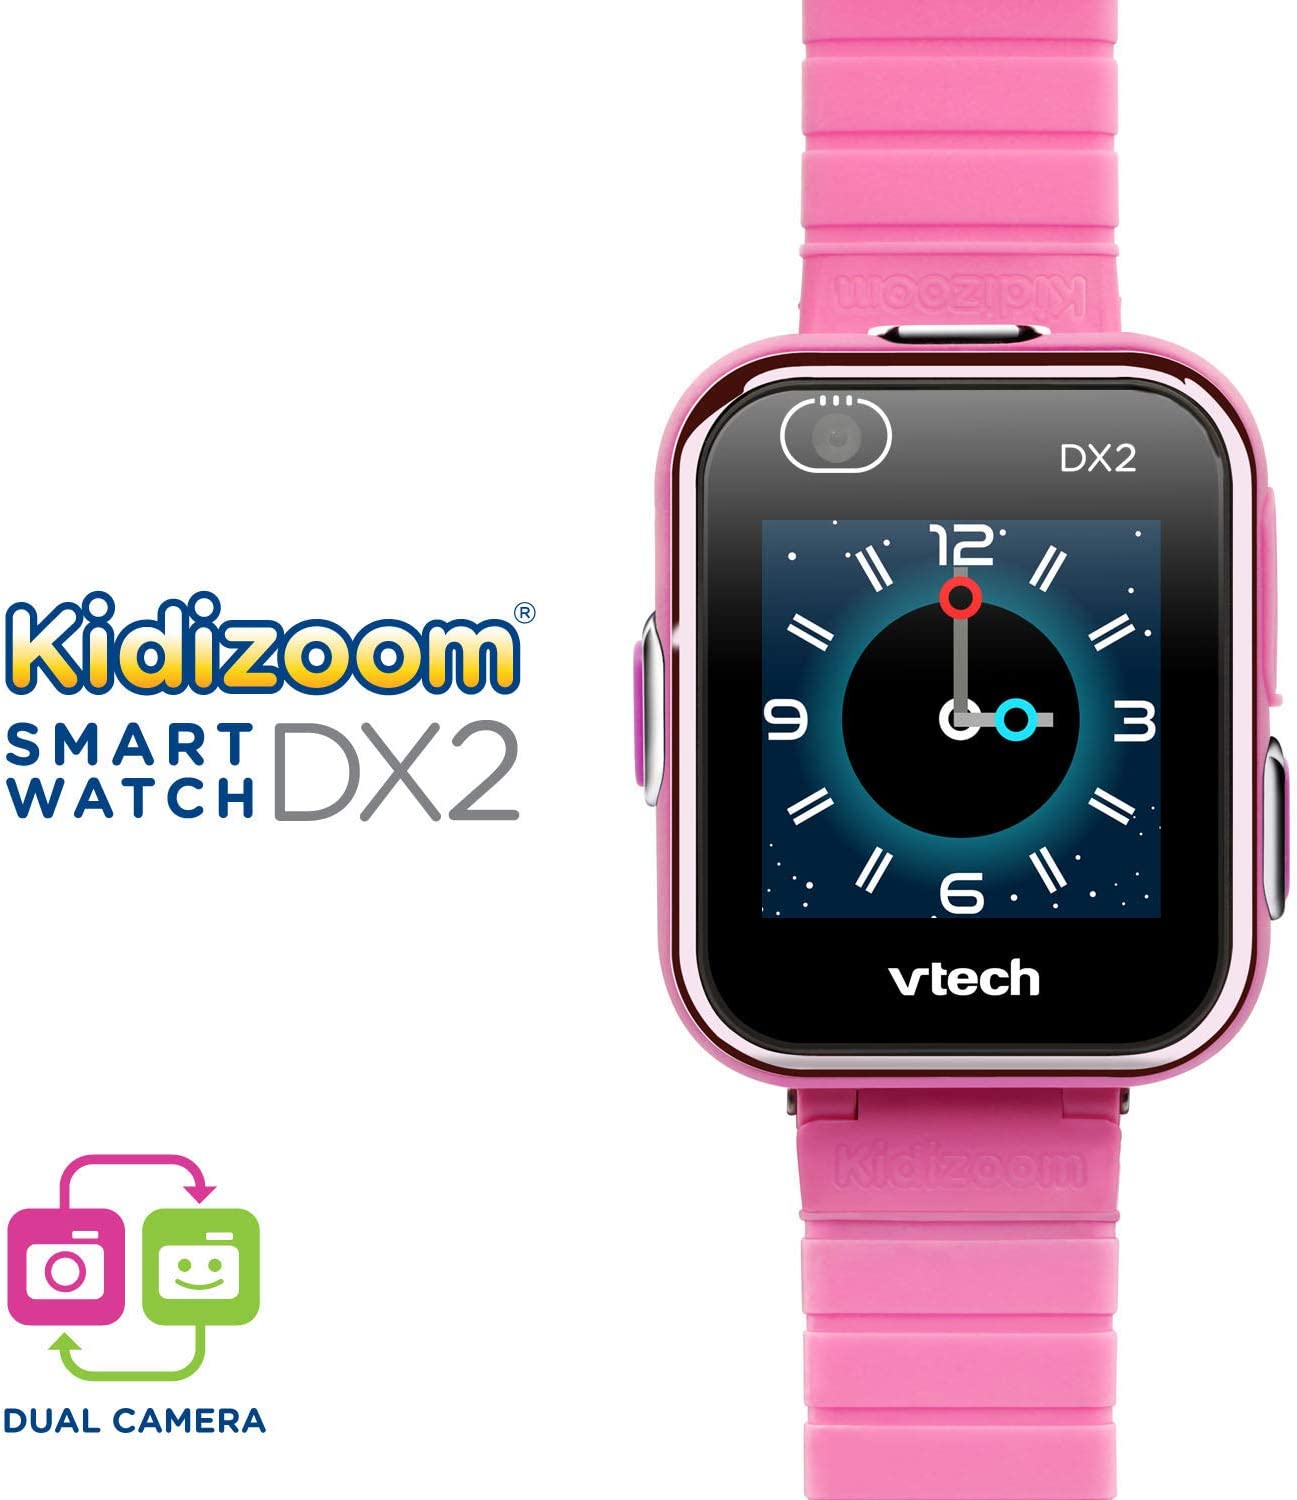 VTech KidiZoom Smartwatch DX2, Pink - Stylish, Kid-Friendly Design